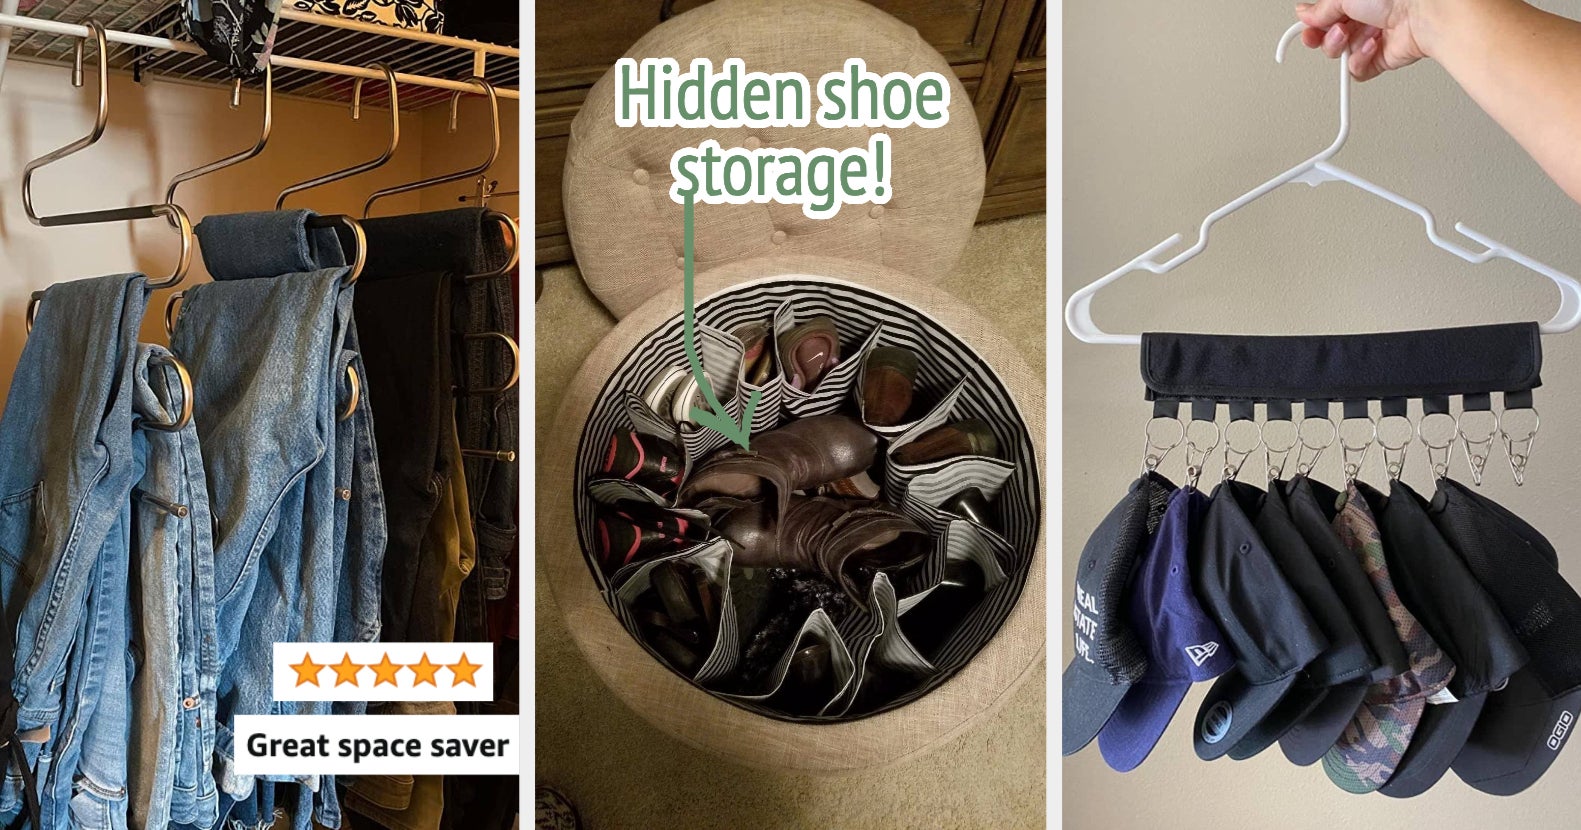 27 Stellar Shoe Storage Ideas For Small Spaces - Tiny Partments  Shoe  storage small space, Ikea wall shelves, Closet shoe storage